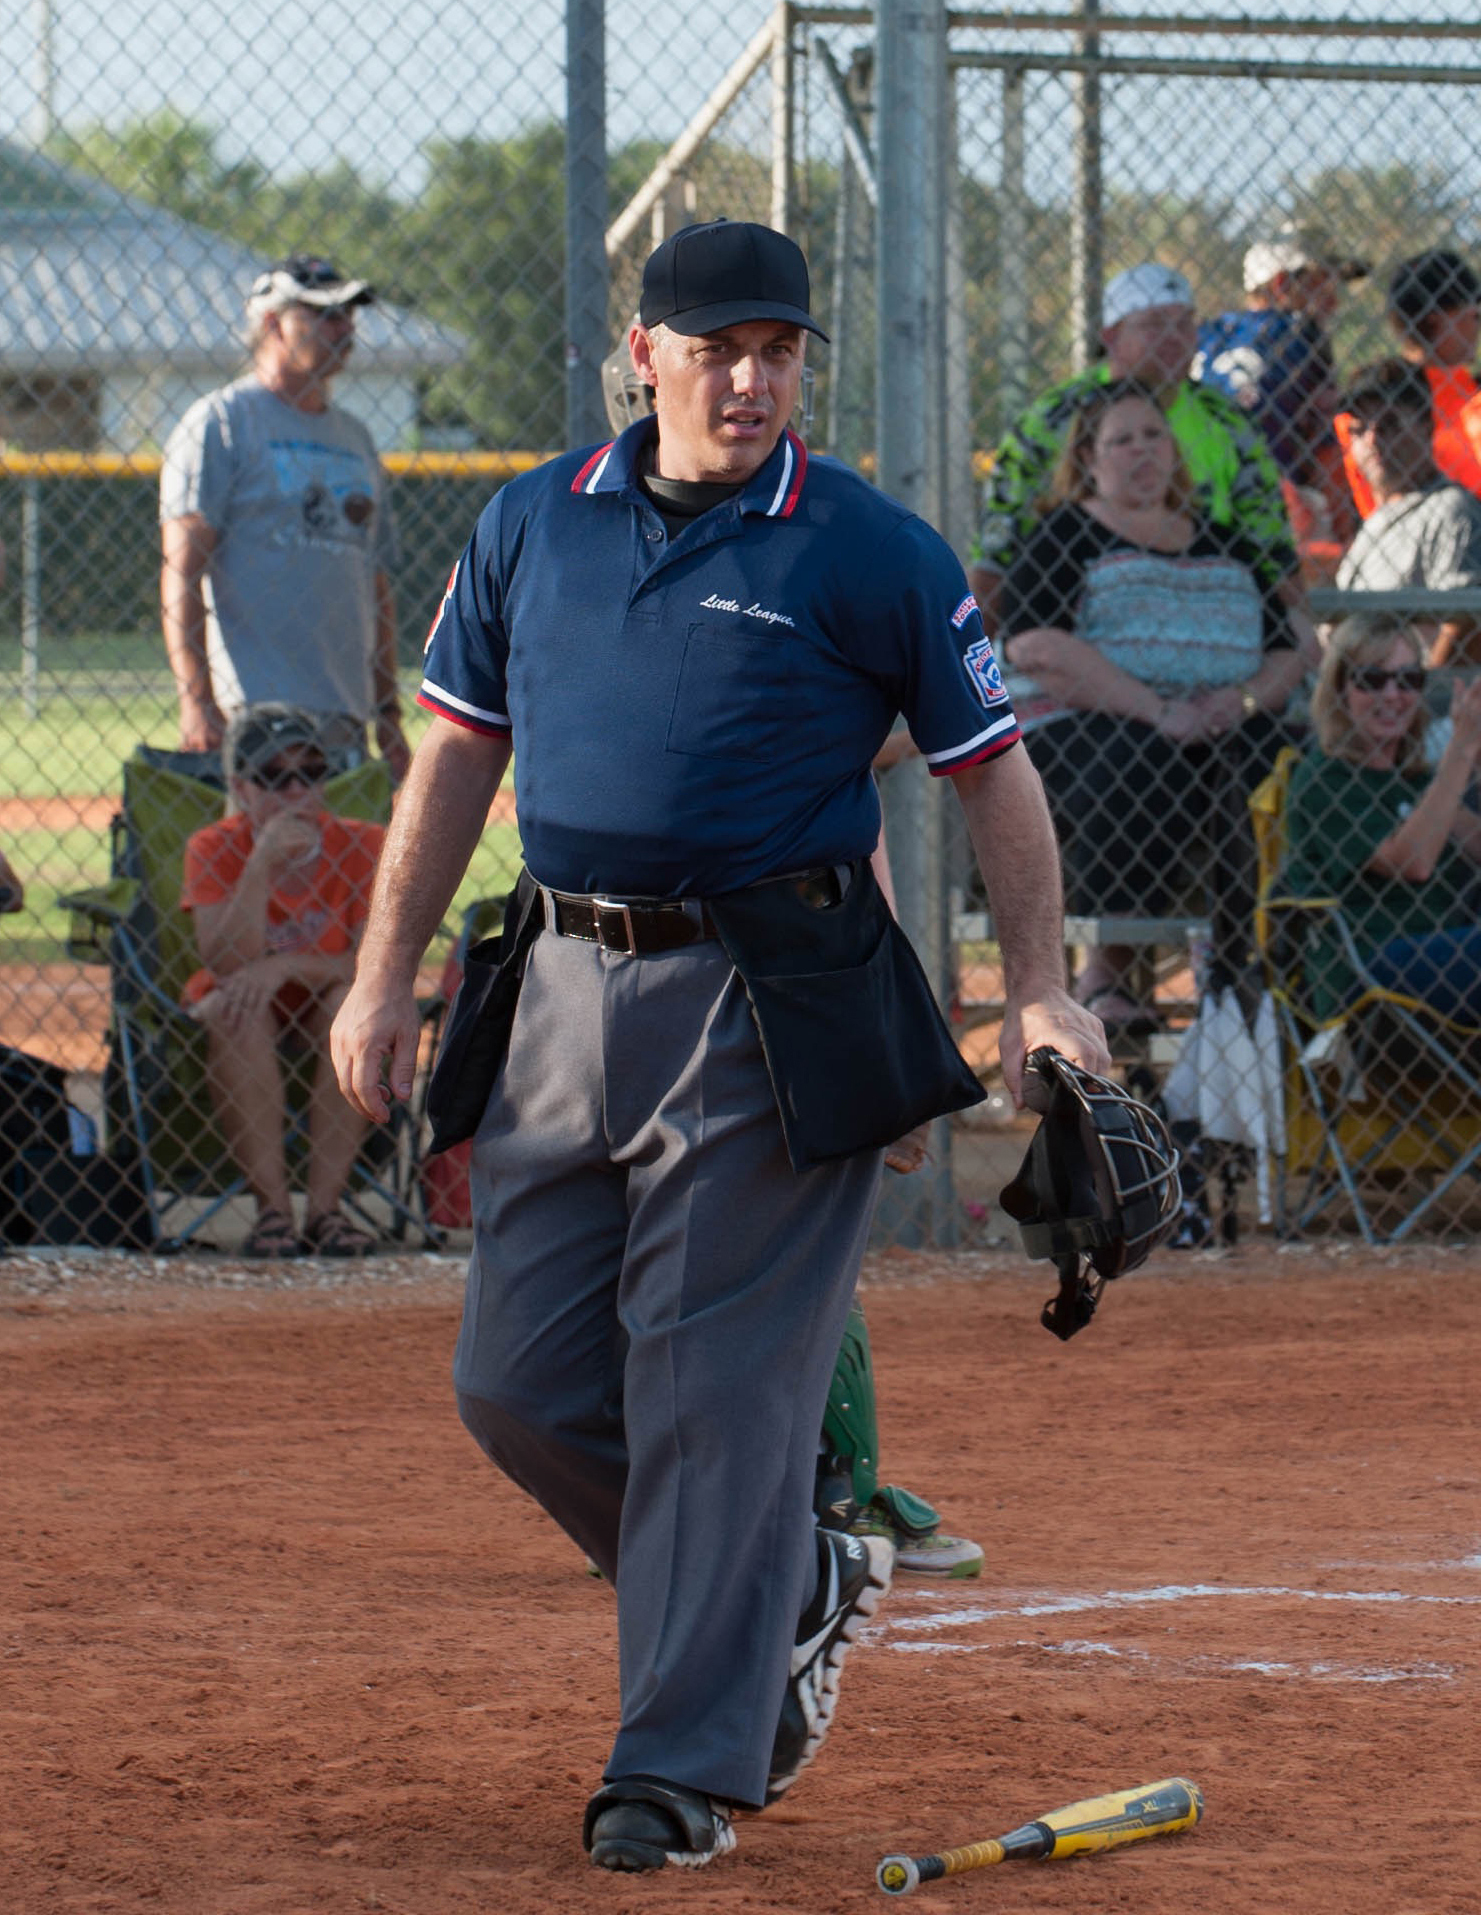 Guy Vilt umpires at least five games a week.